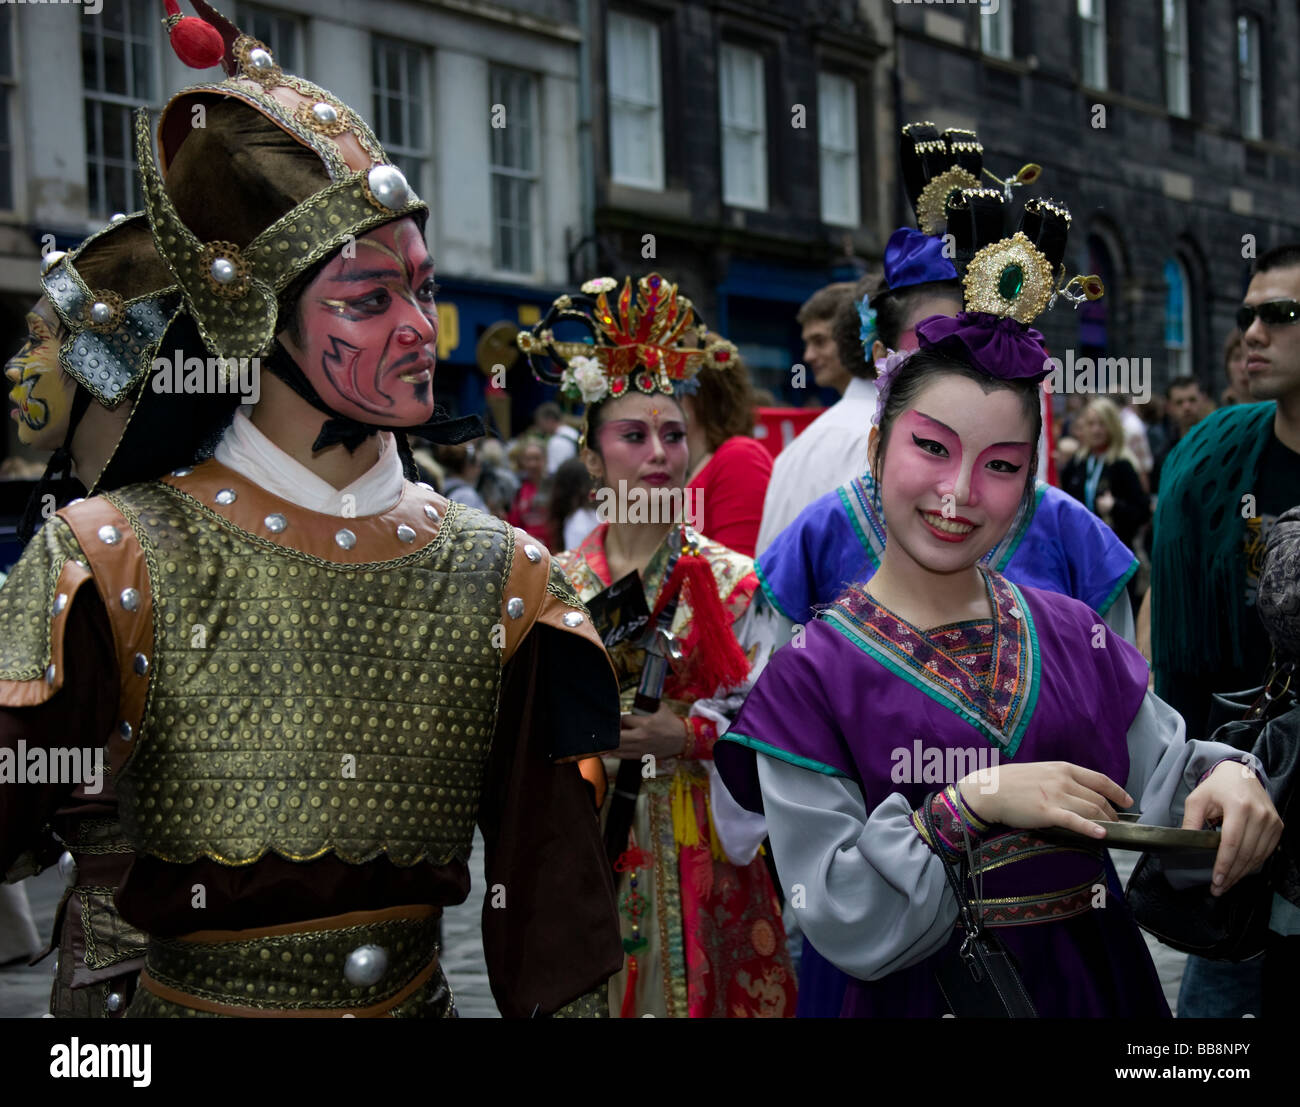 Oriental Performers promoting show Edinburgh Fringe Festival Scotland UK Europe Stock Photo